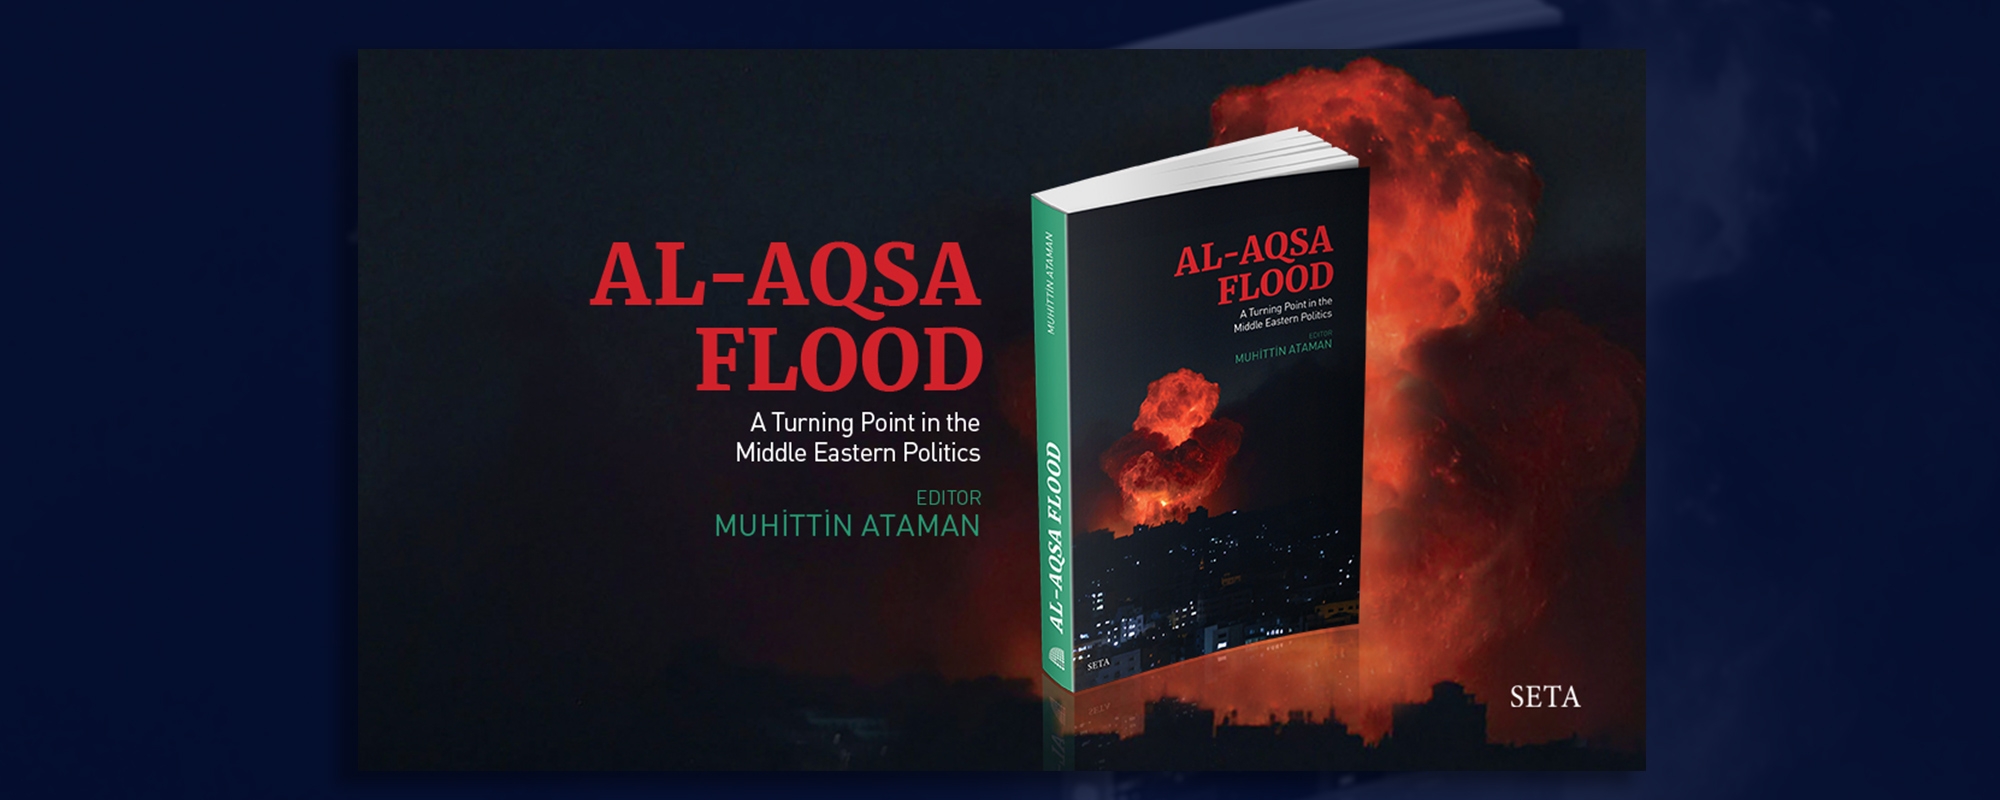 Al-Aqsa Flood A Turning Point in Middle Eastern Politics